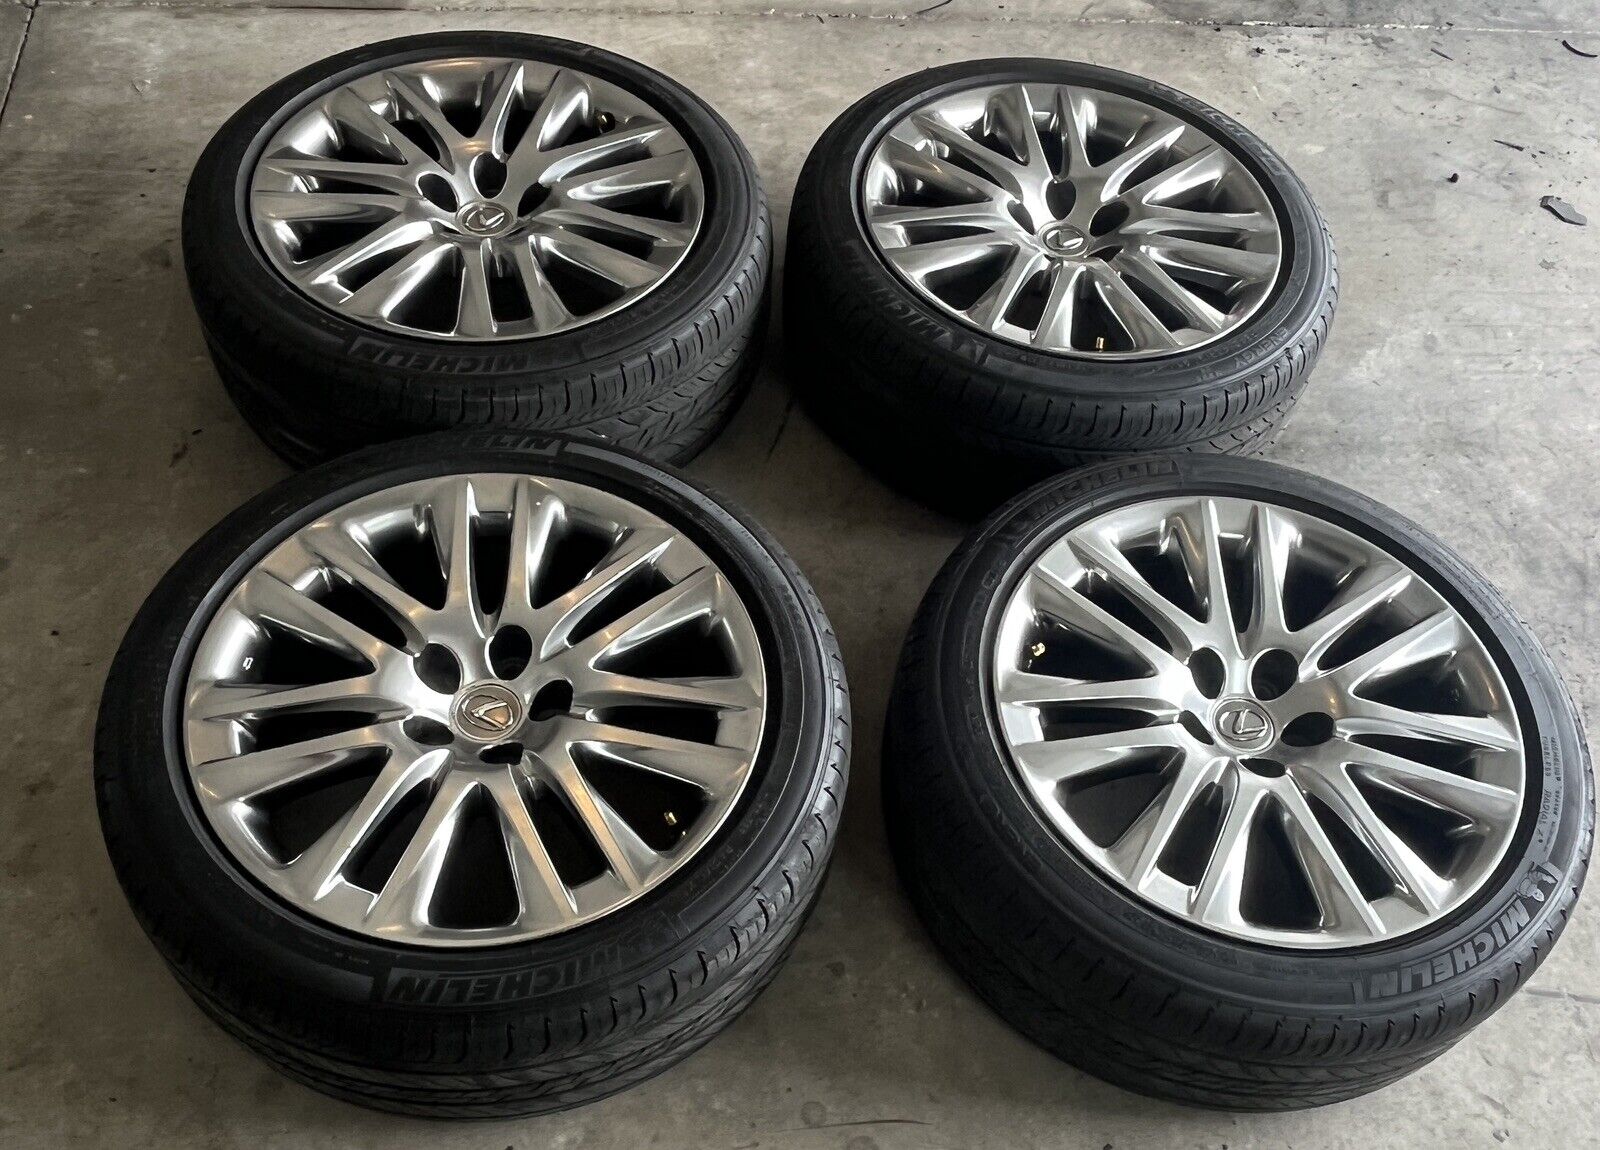 19’ Lexus LS 460 wheels on 245/45/19 Michelin tires